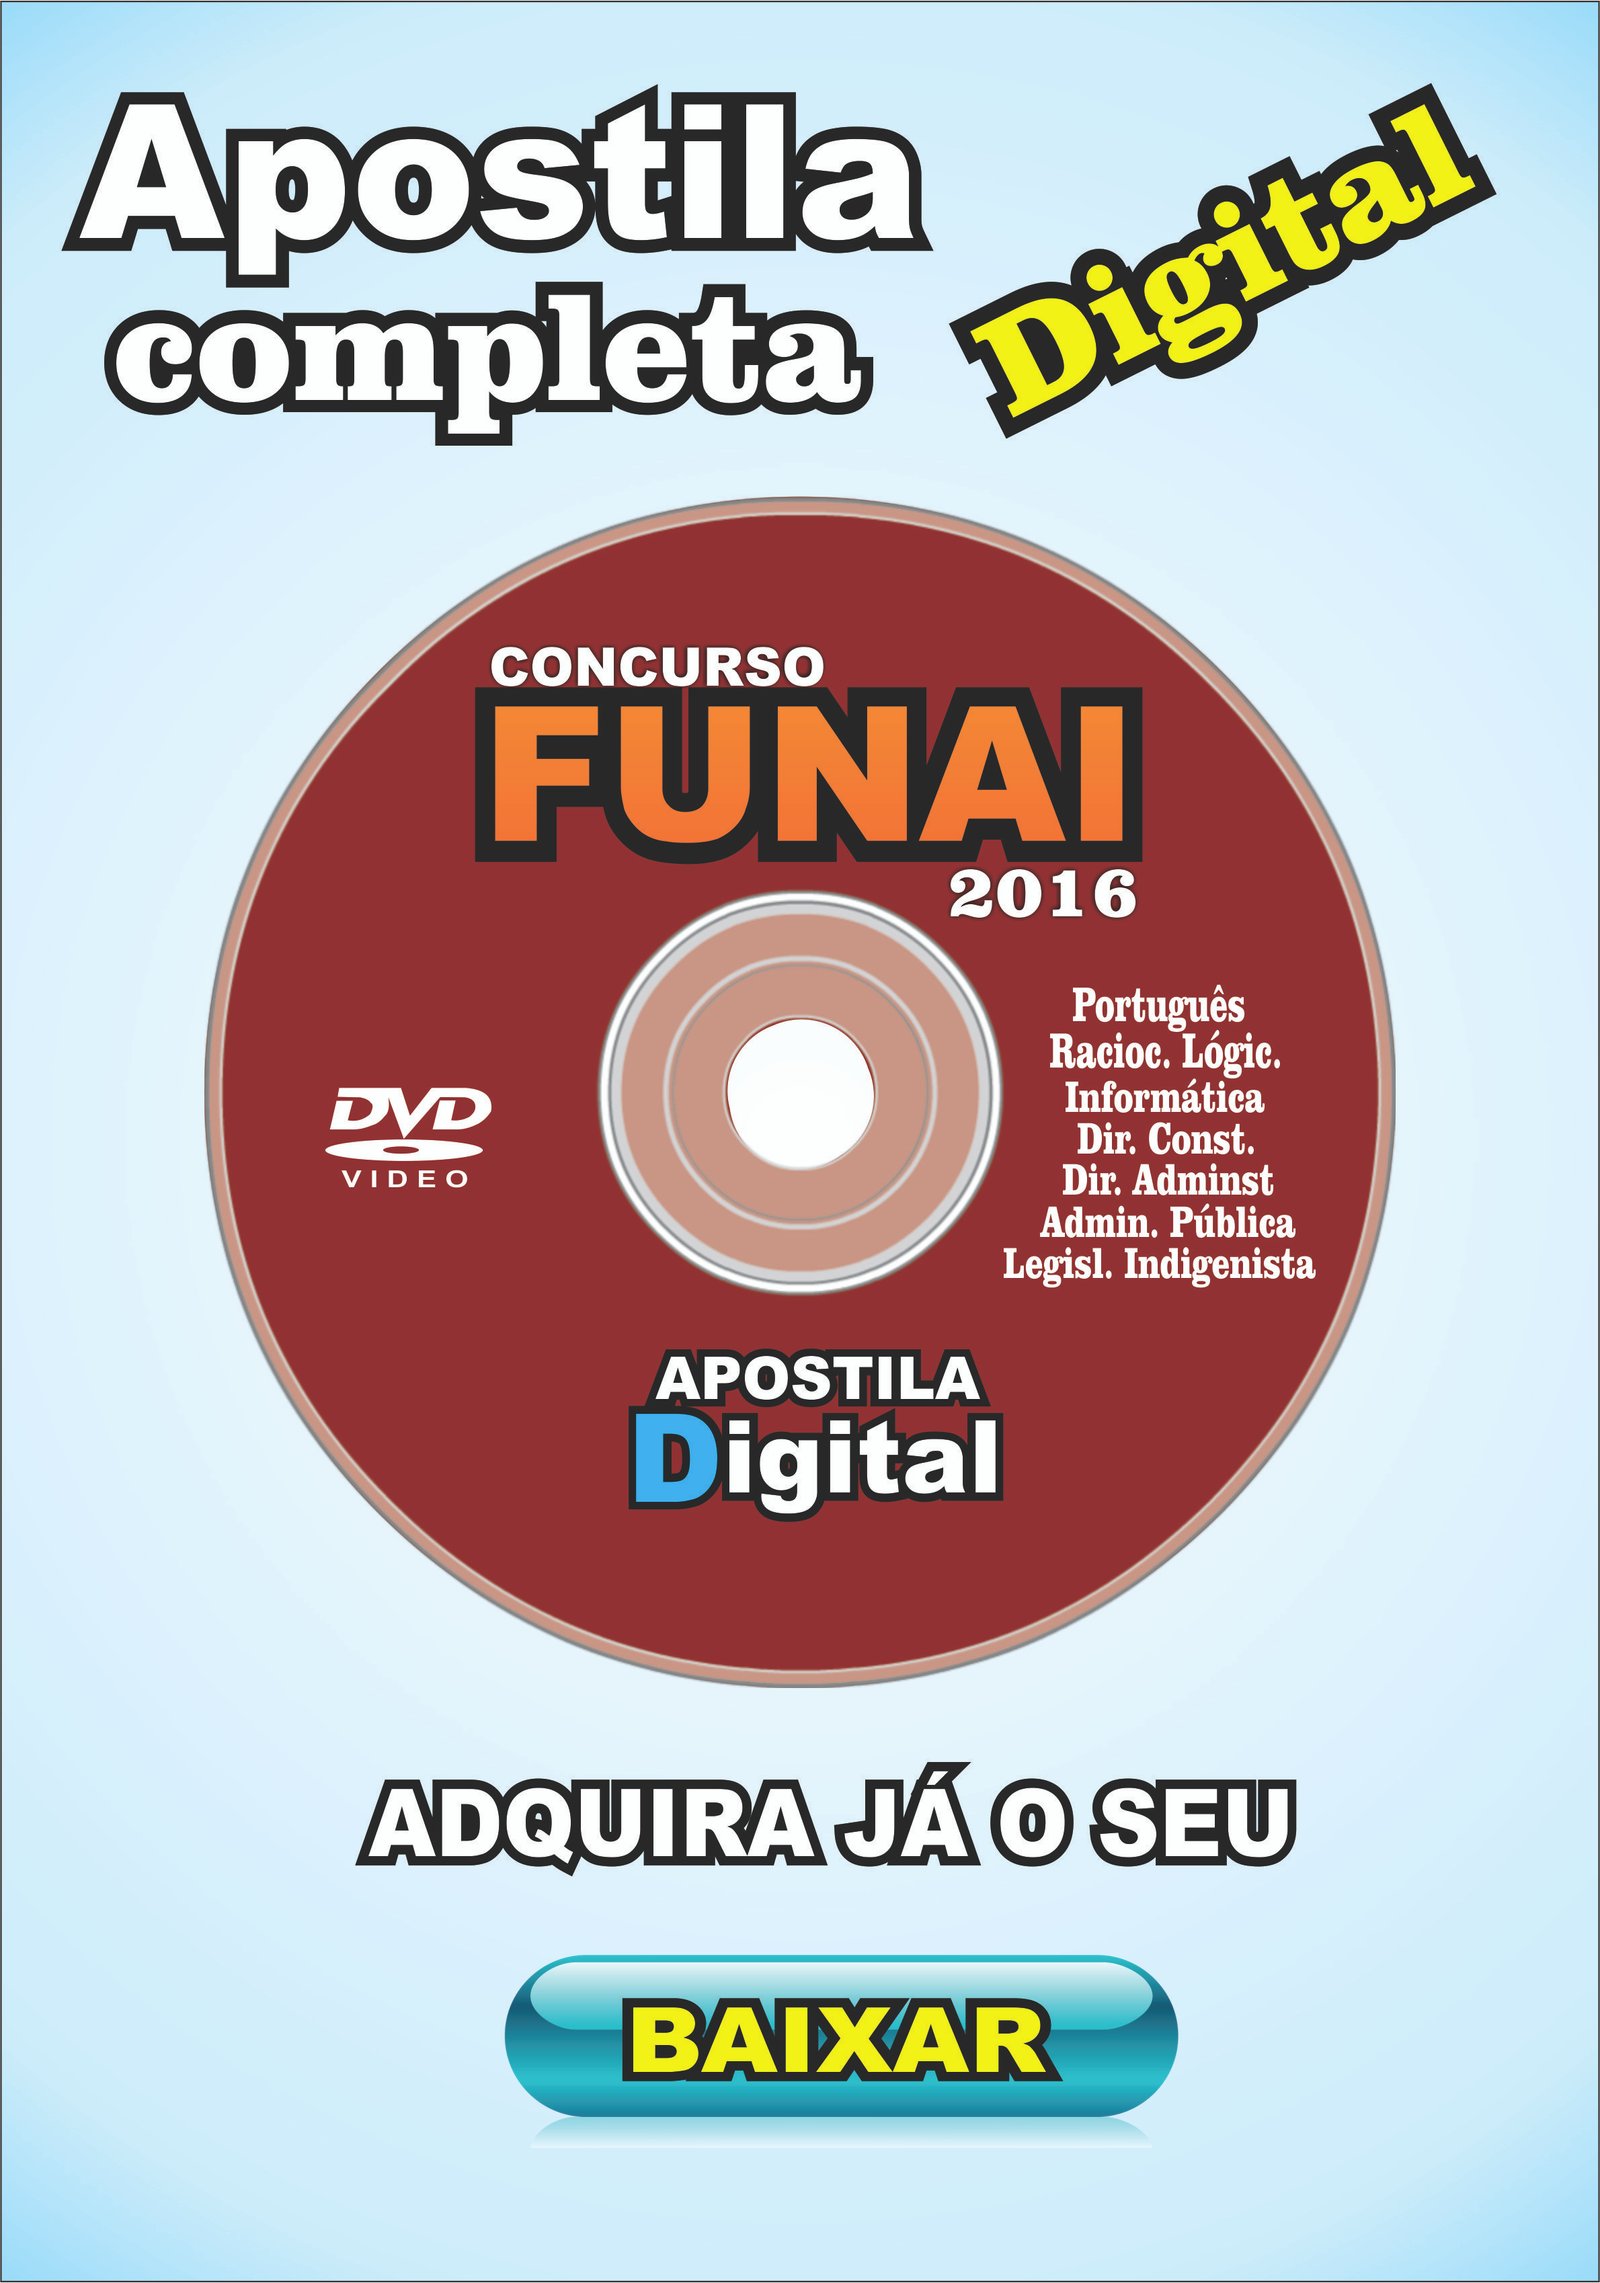 CD FUNAI - 2016